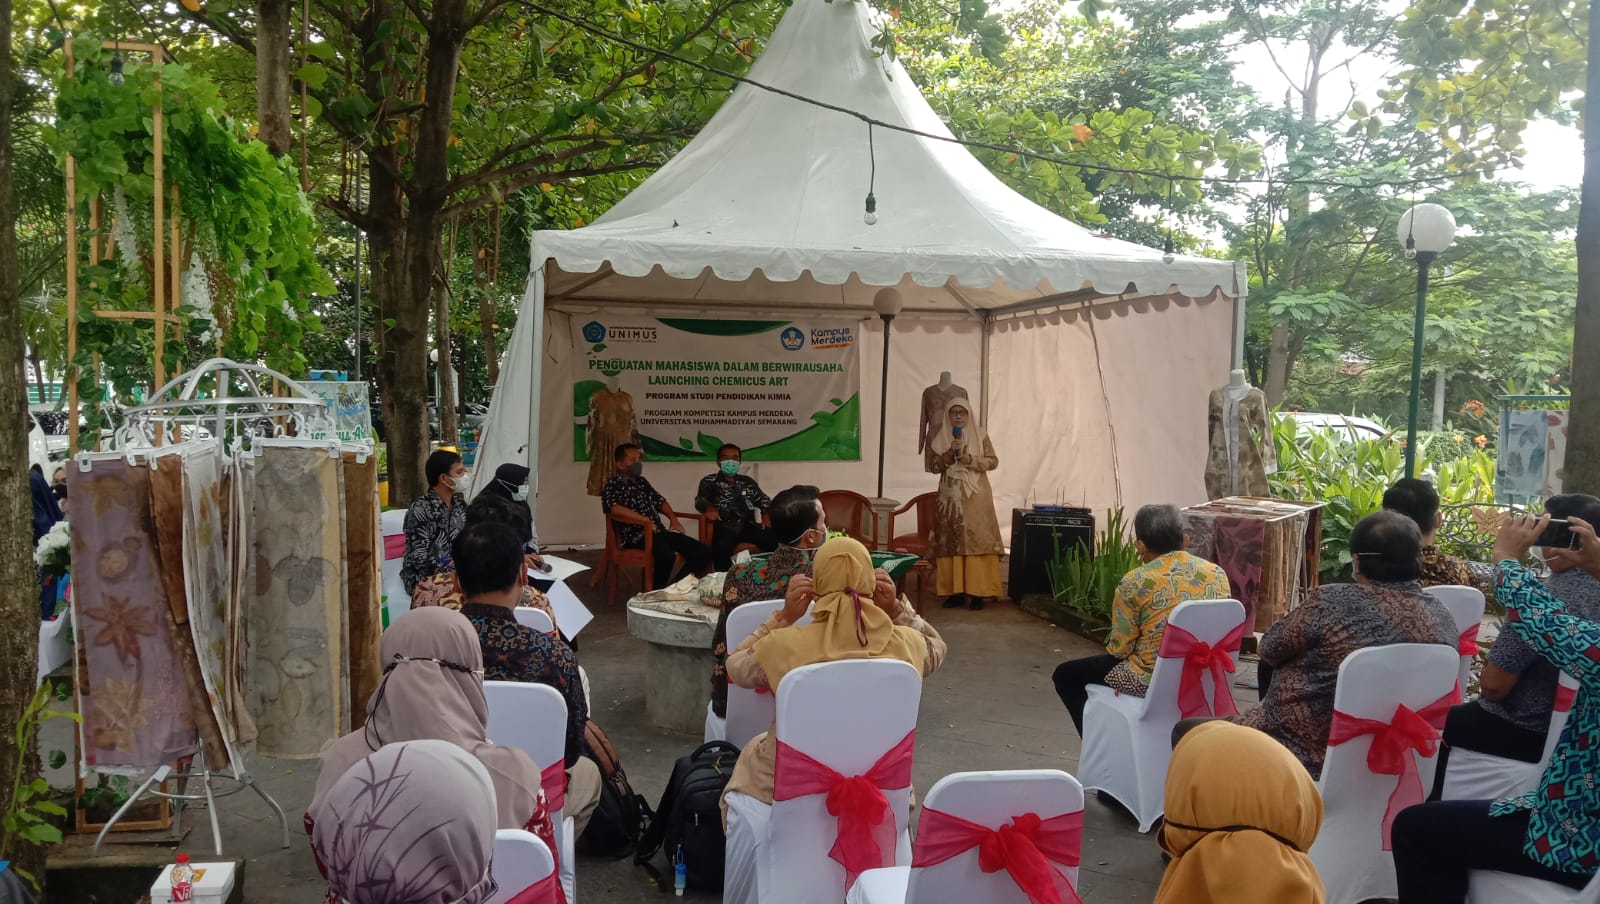 Program Studi Kimia Universitas Muhammadiyah Semarang Launching Chemicus Art